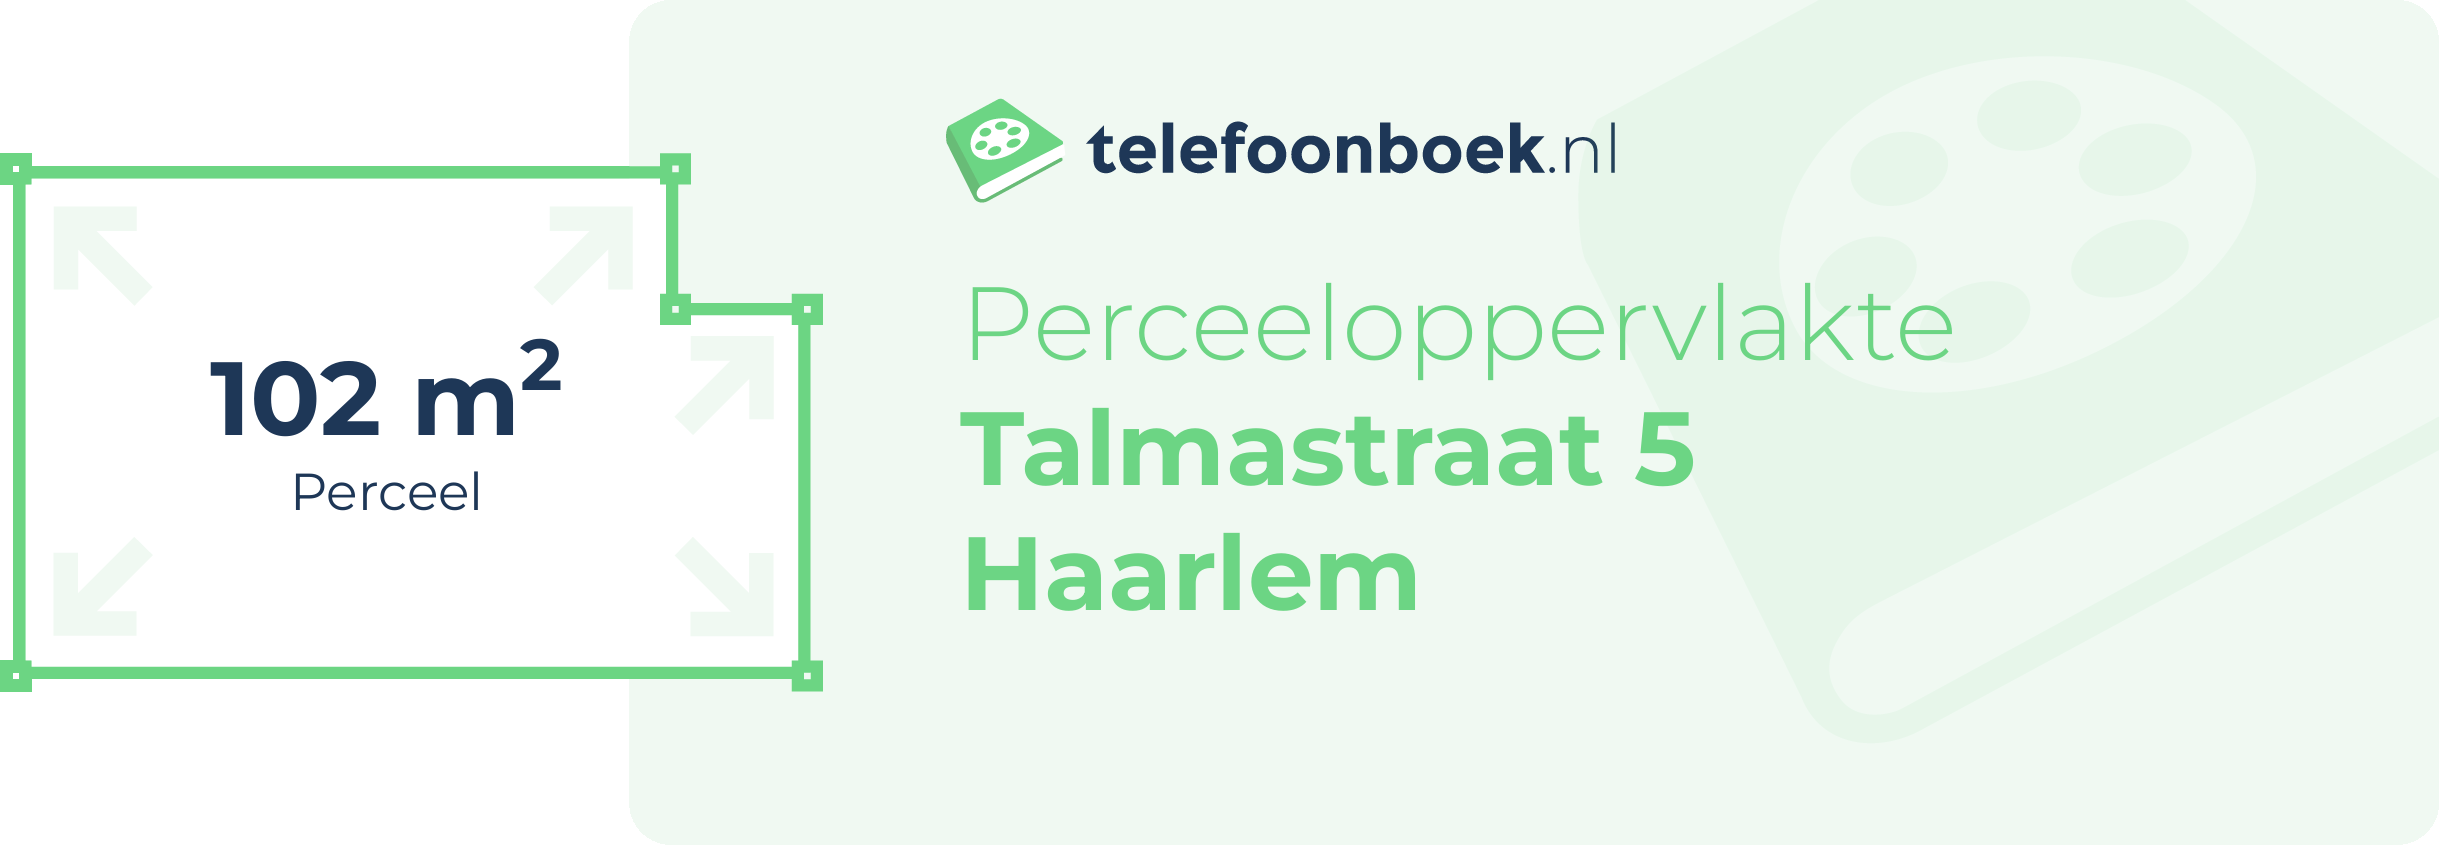 Perceeloppervlakte Talmastraat 5 Haarlem